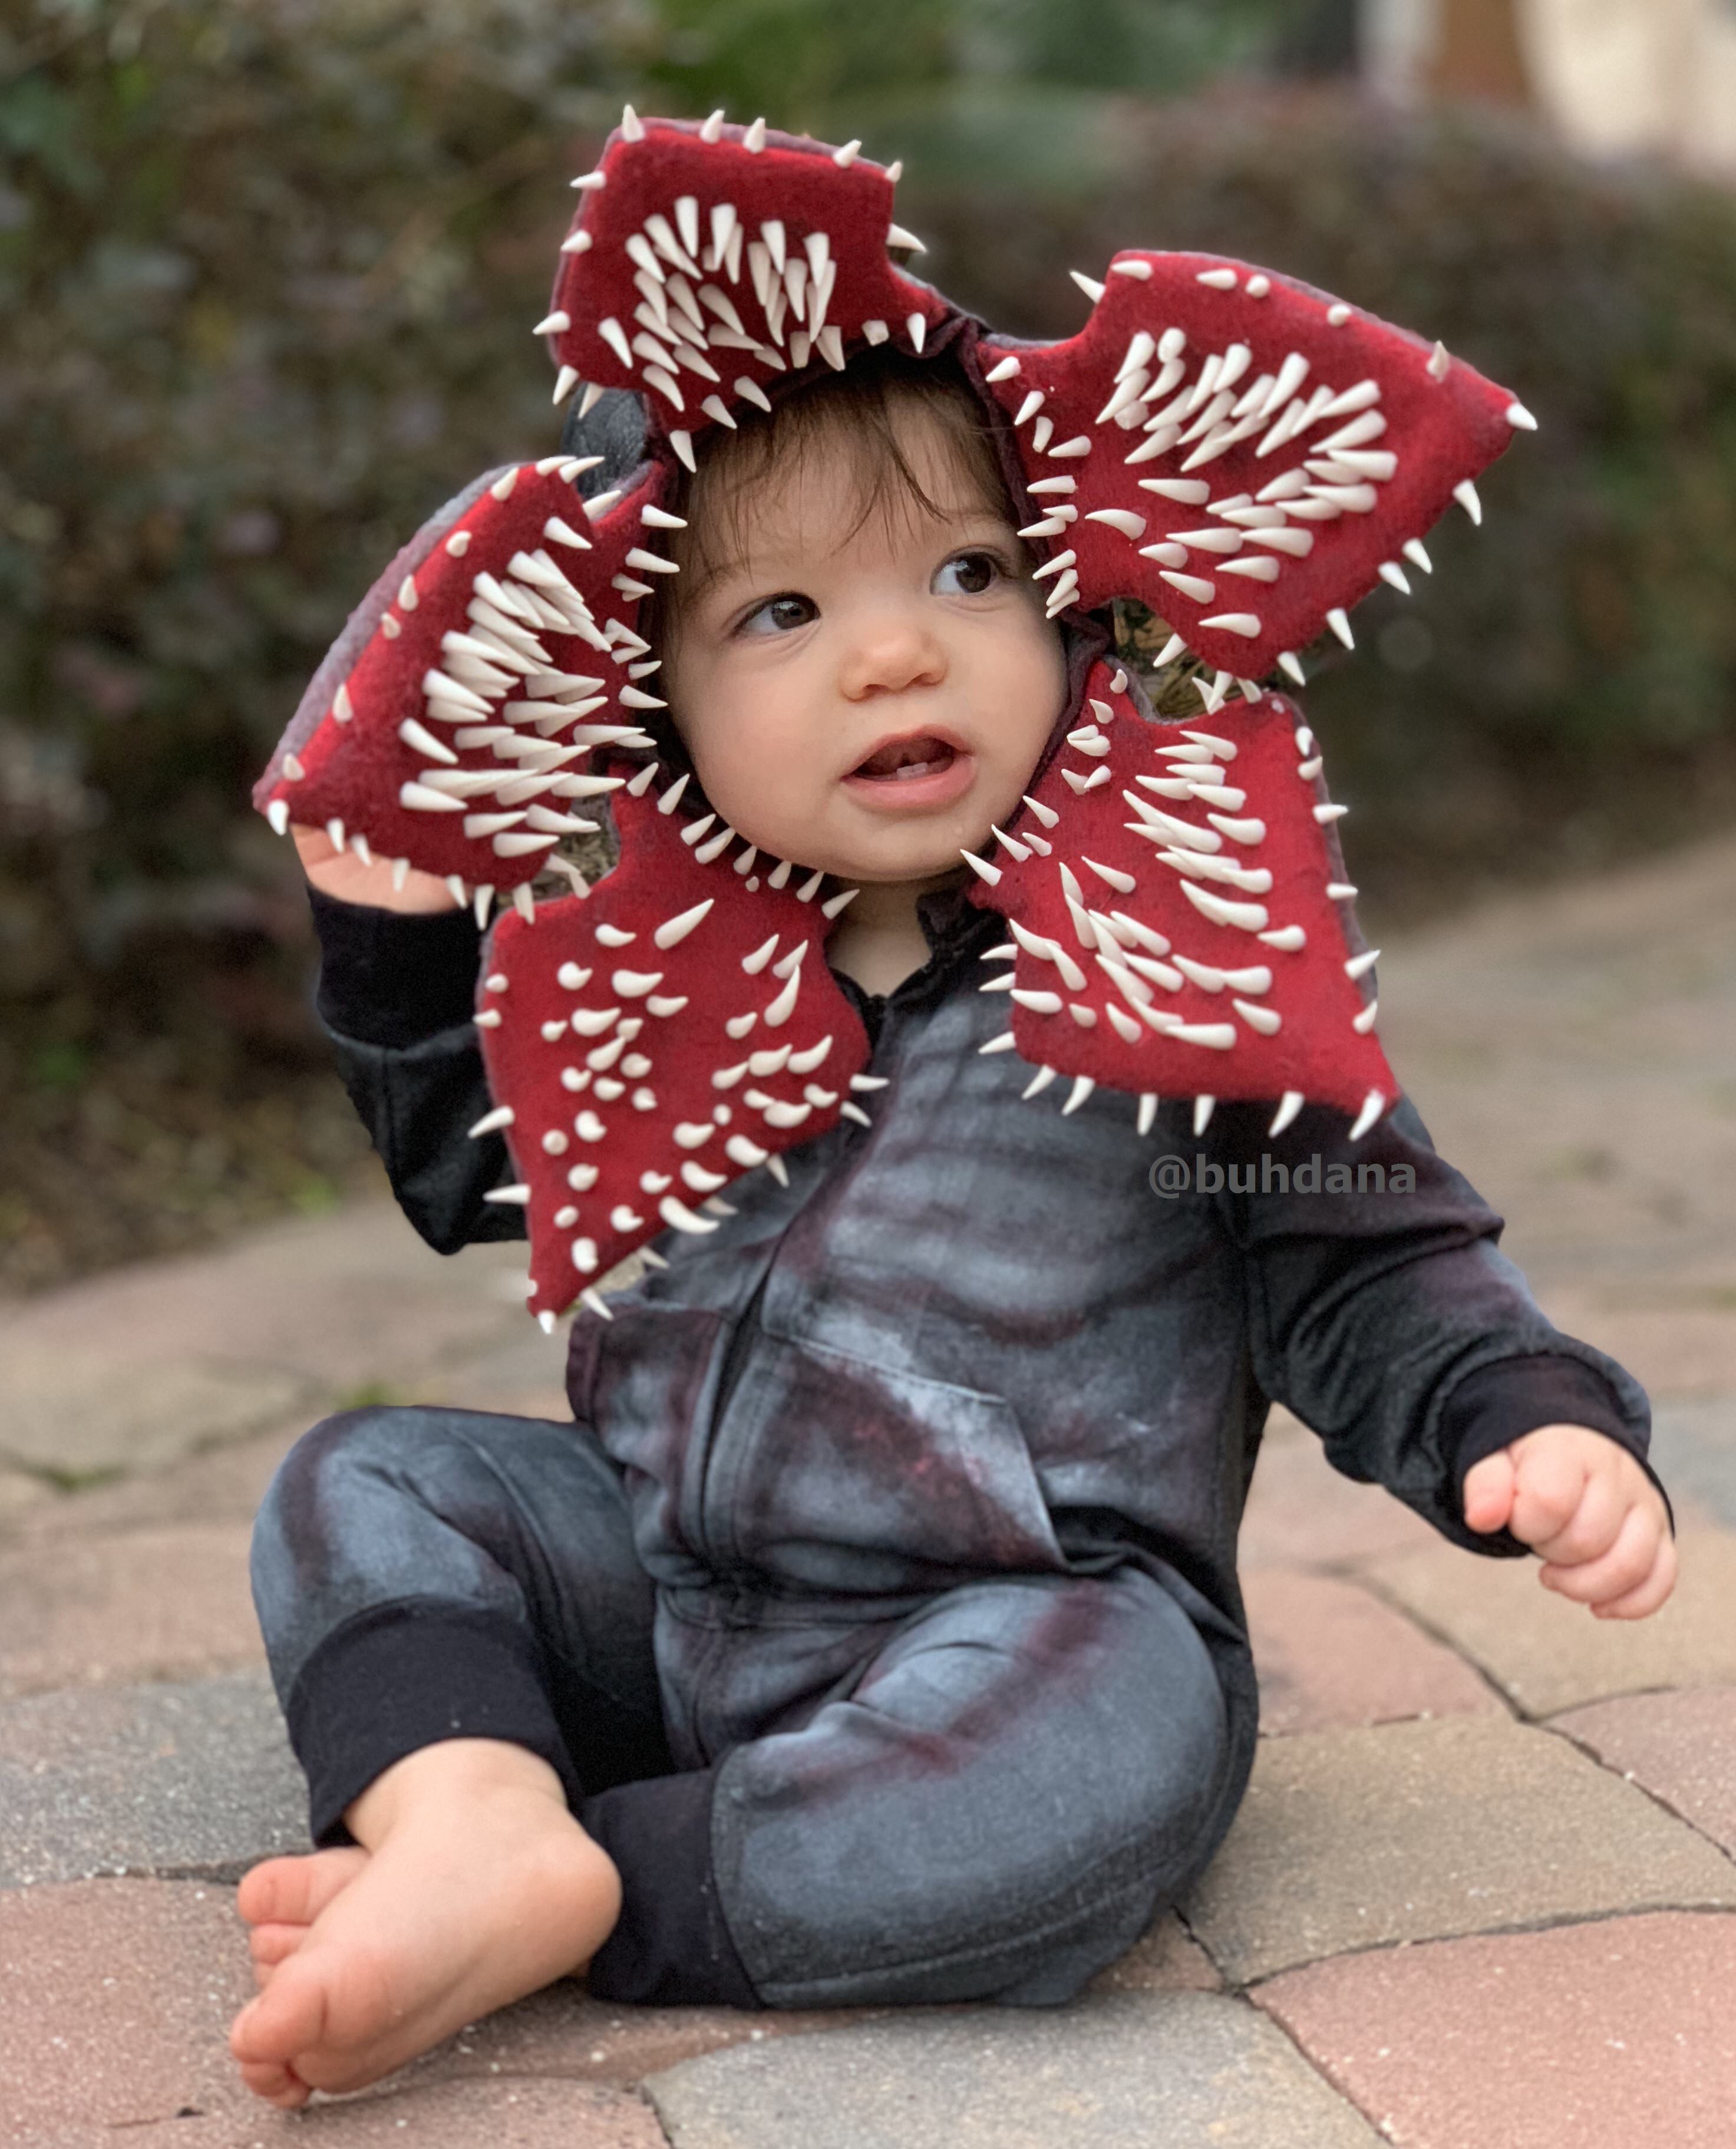 Baby Demogorgon costume buhdana